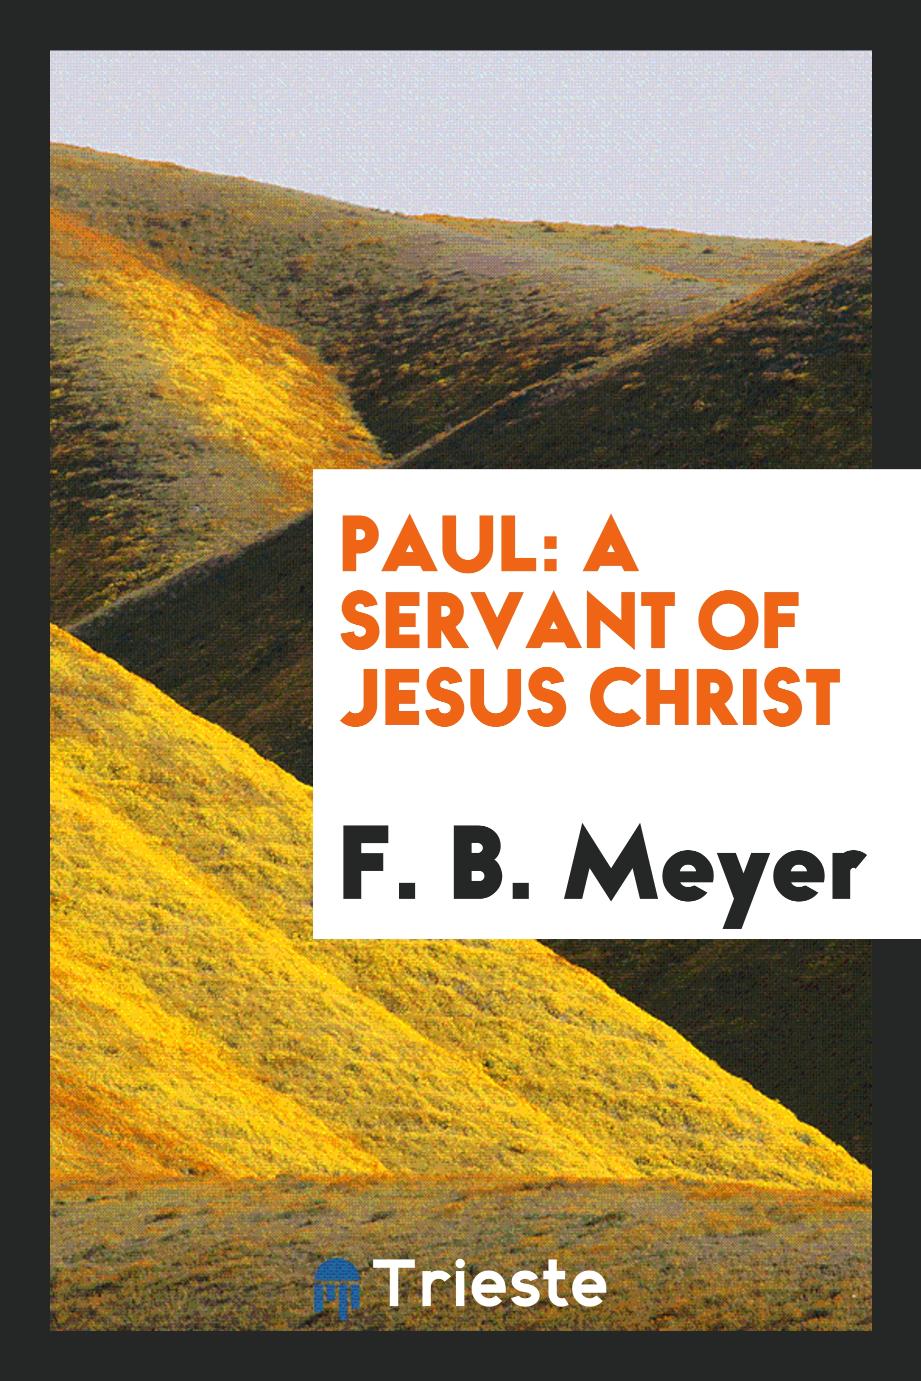 Paul: A Servant of Jesus Christ